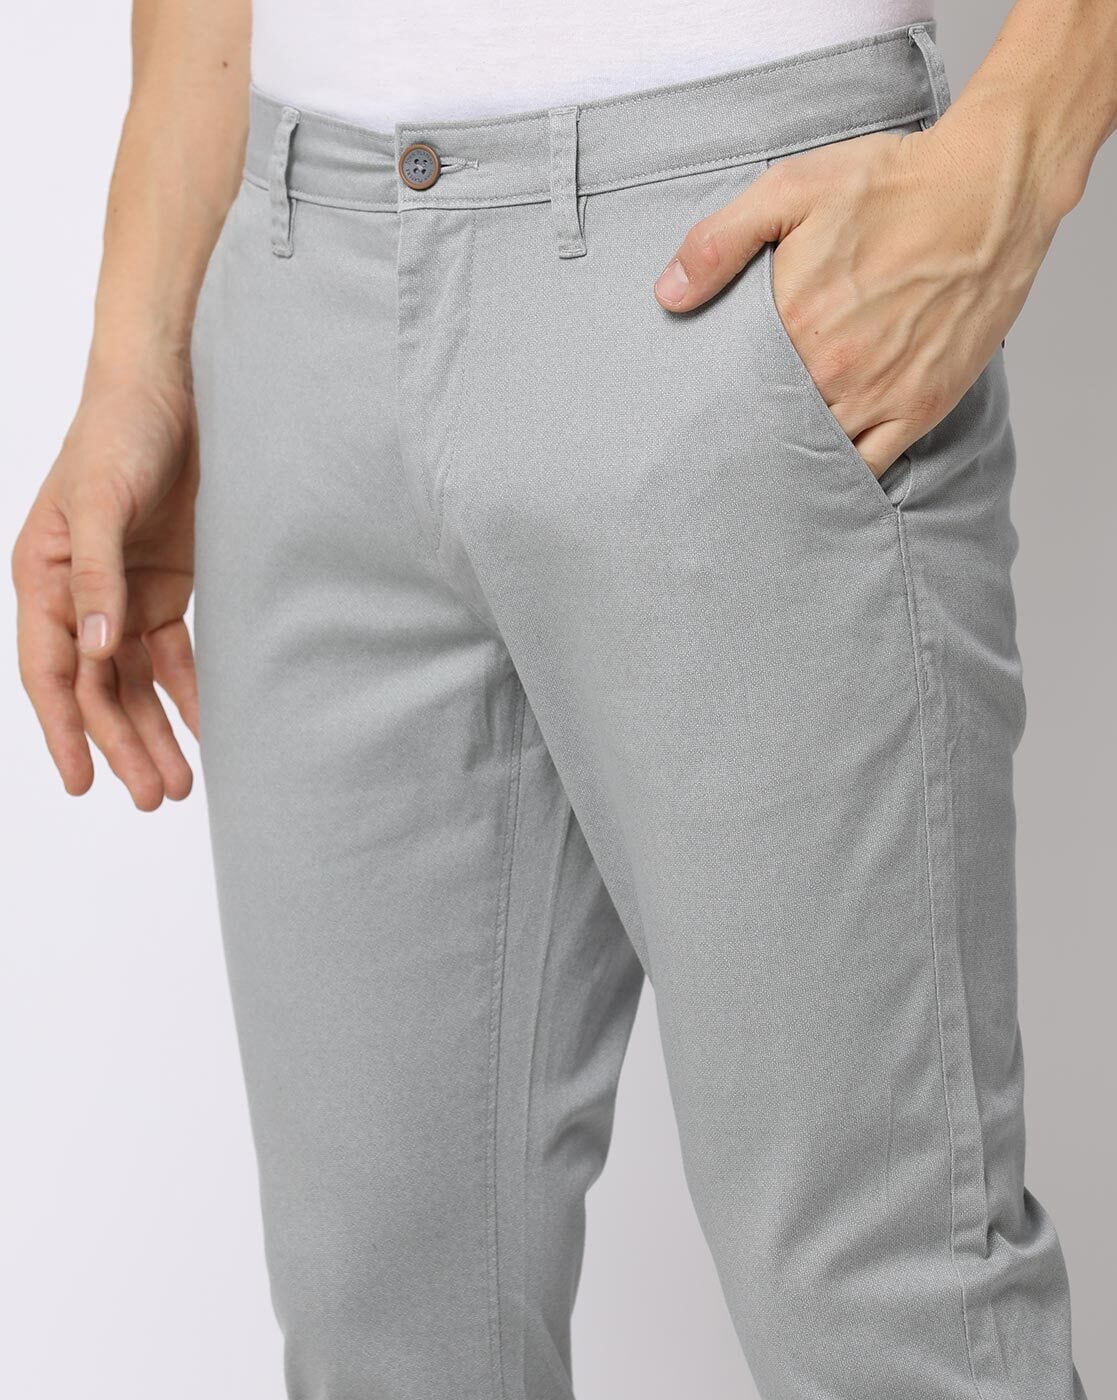 Lululemon Men's Pants, Reviewed: 5 Sleeper-Hit Styles That Look Pretty  Good, Actually 2023 | GQ